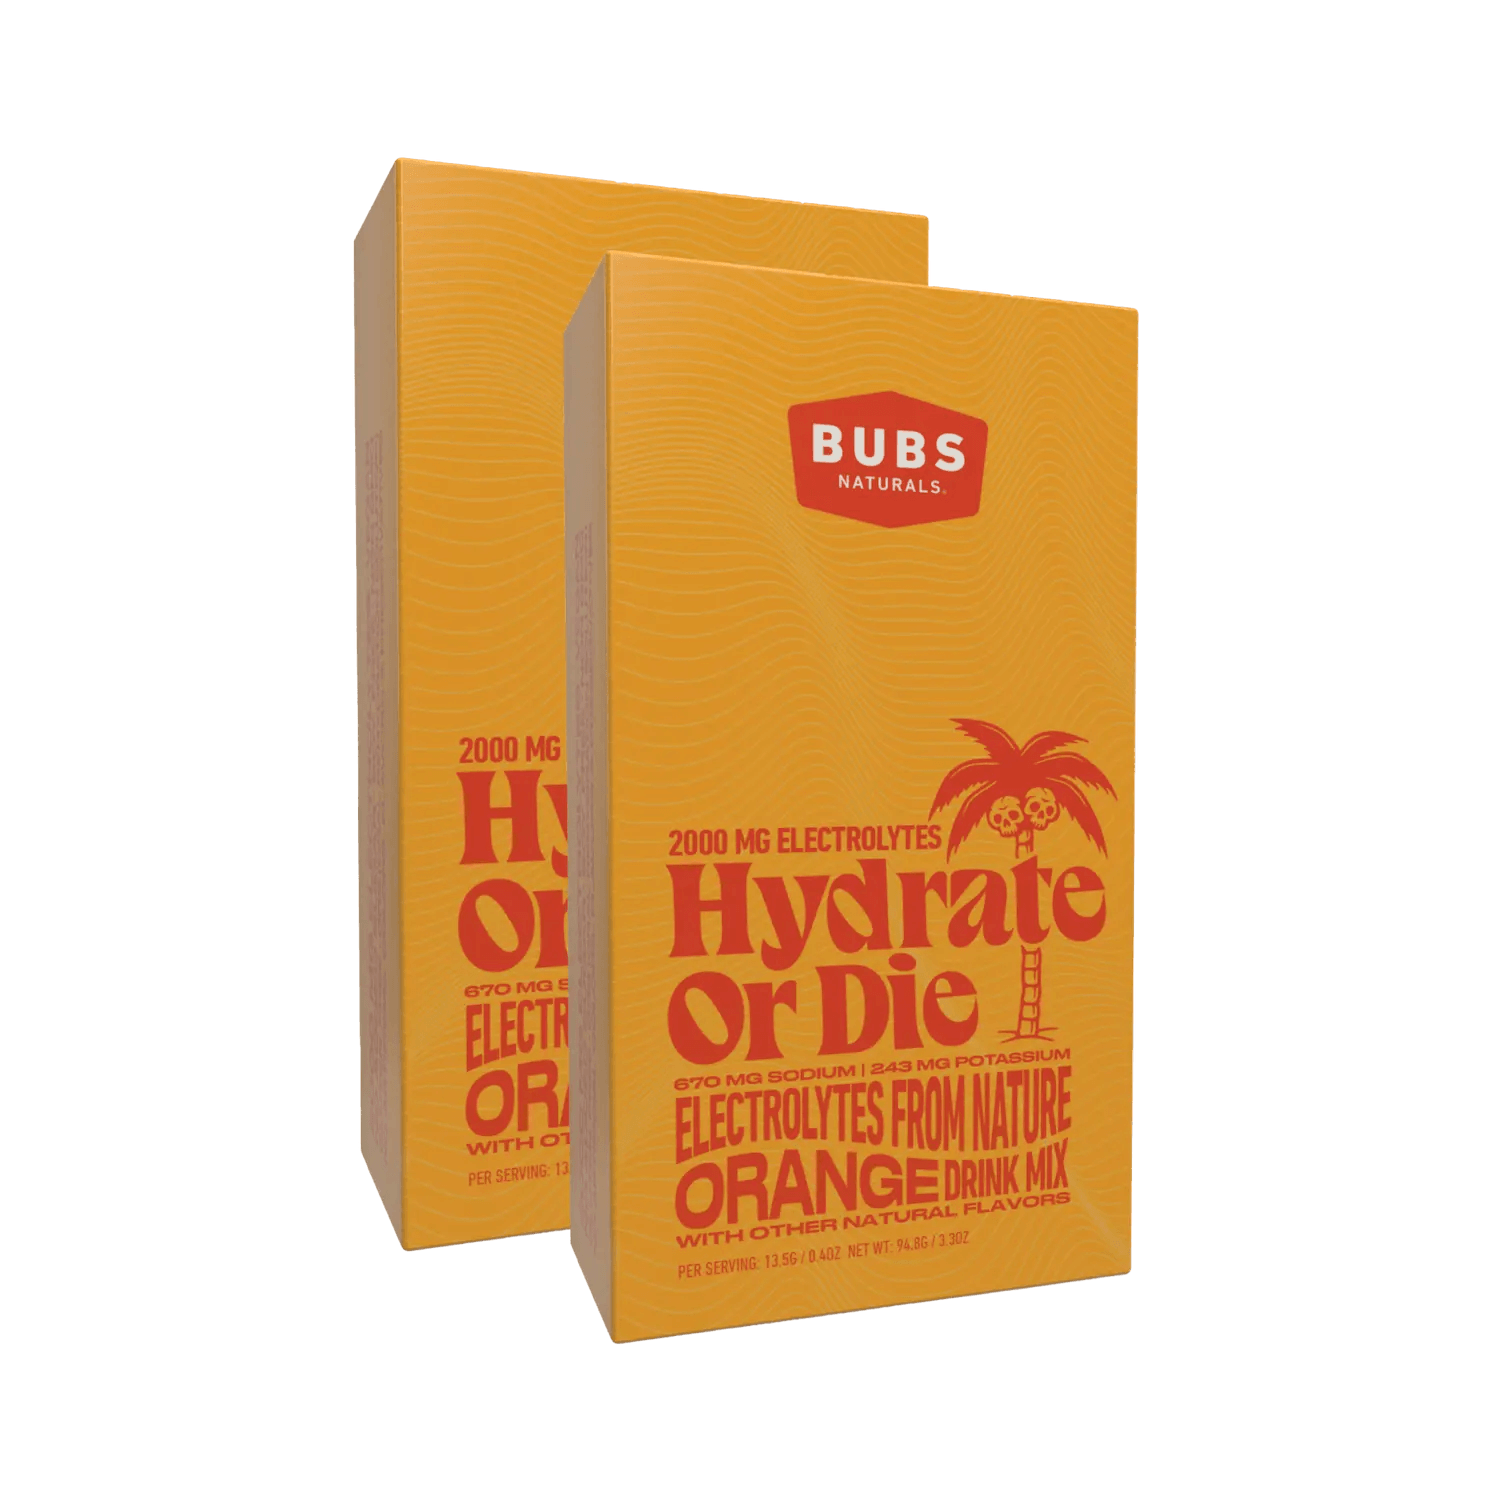 BUBS Naturals Hydrate or Die Electrolyte Cartons, orange, bundle of 2